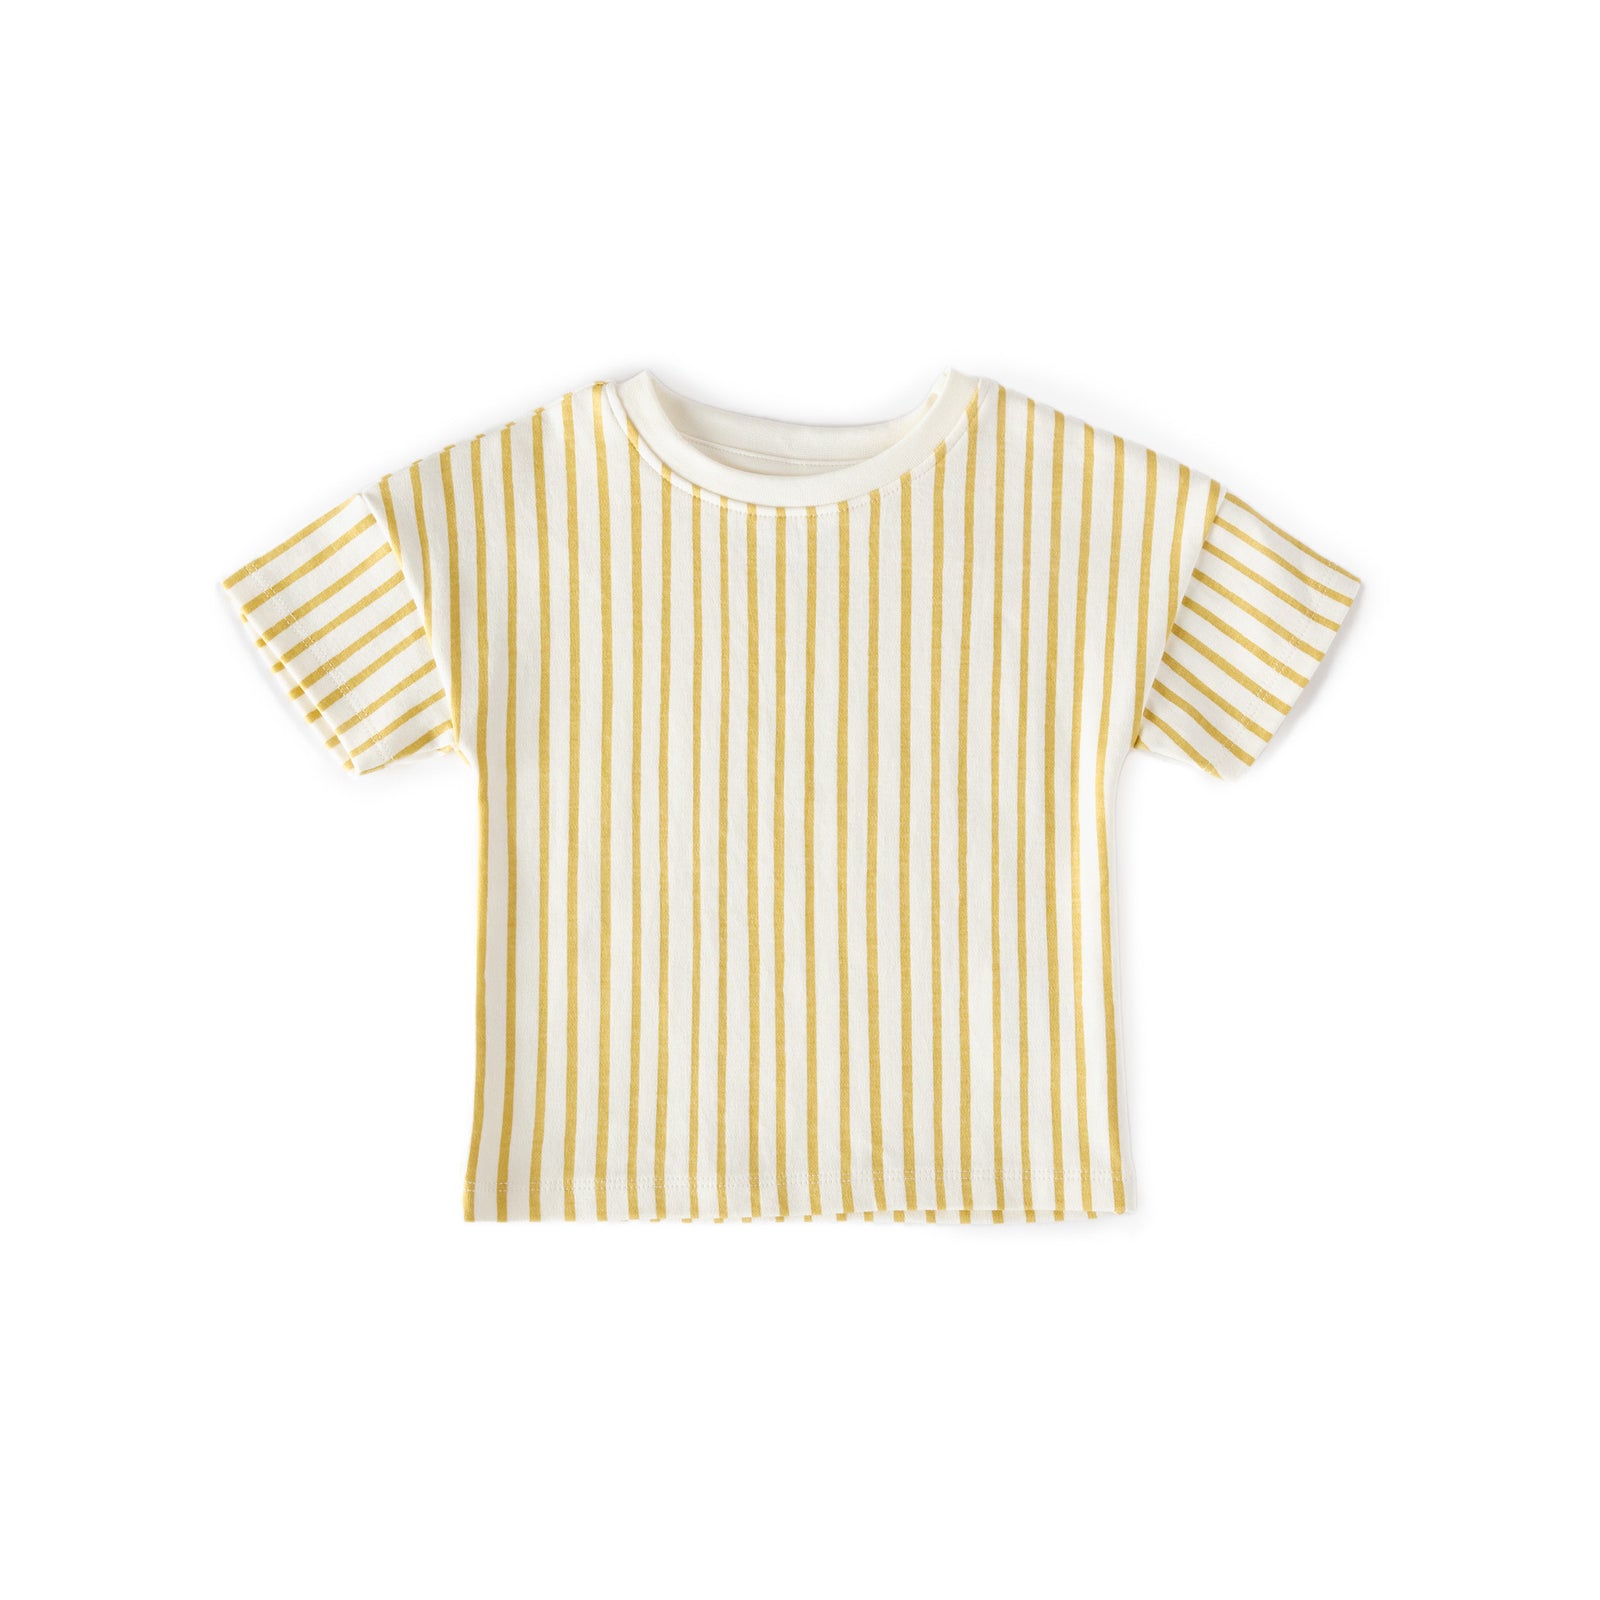 Dropped Shoulder T-Shirt Top Pehr Canada Stripes Away Marigold 2 T 